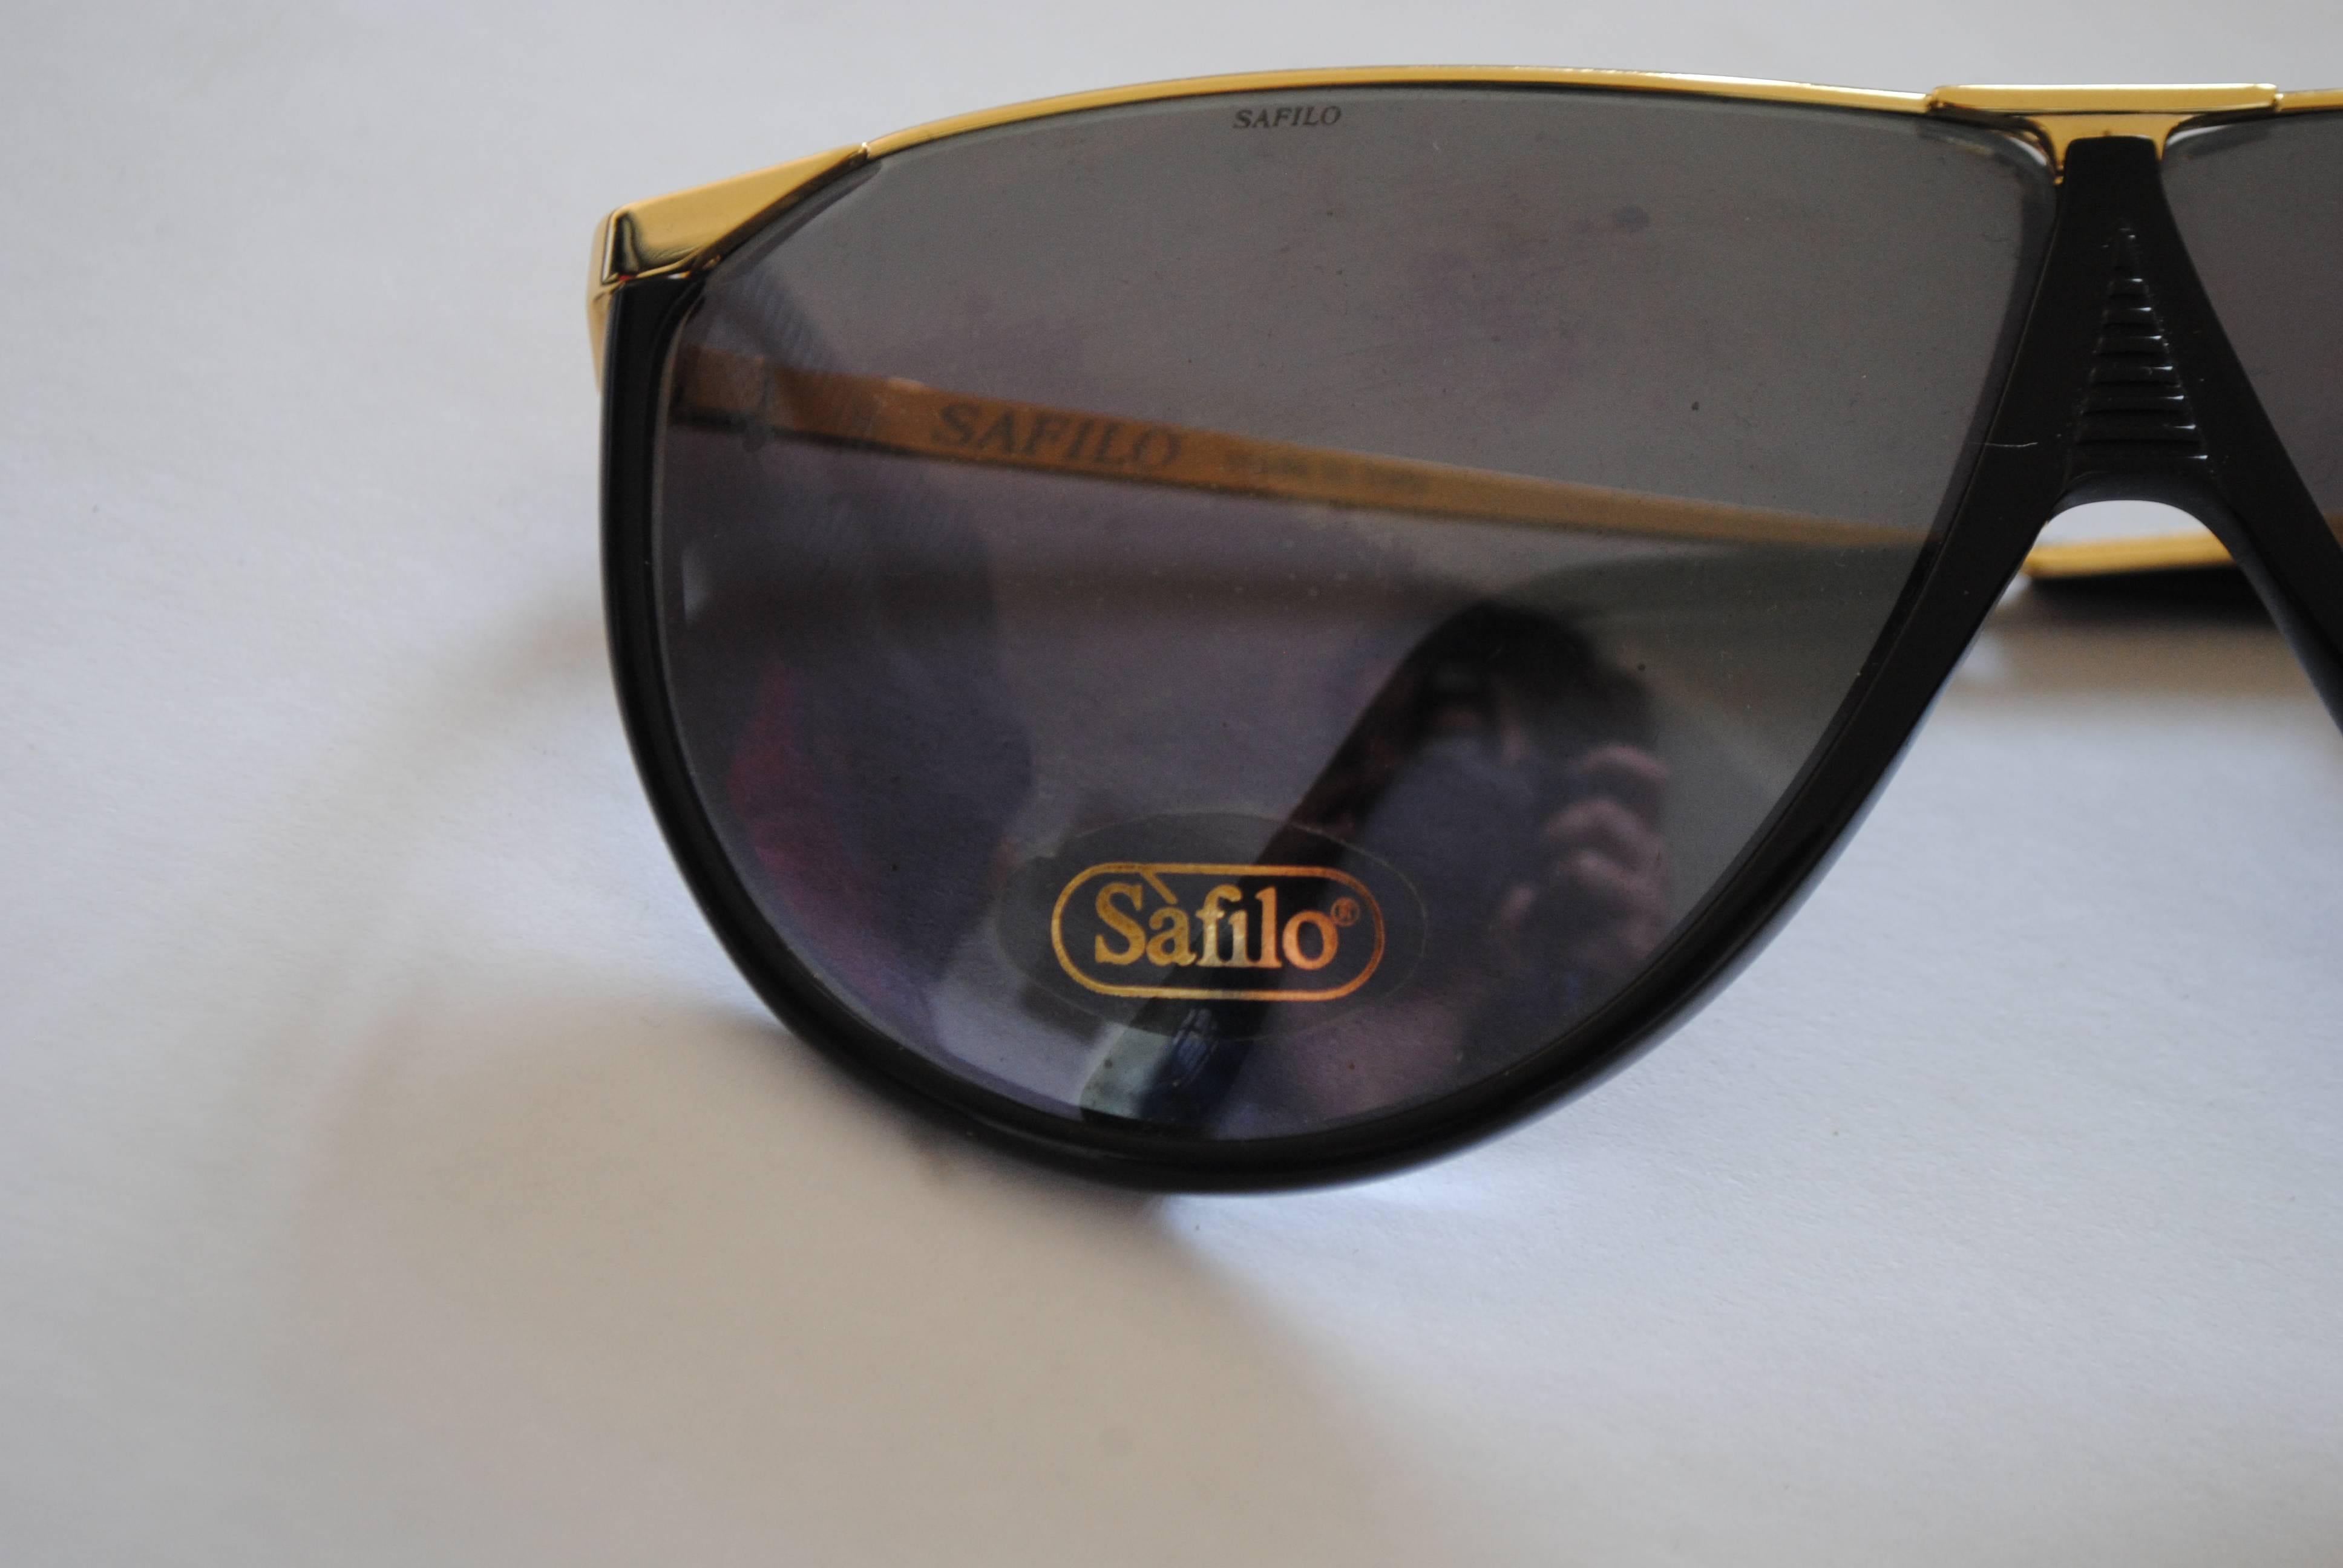 1990s Safilo Black & Gold Sunglasses
Totally made in italy
Unworn